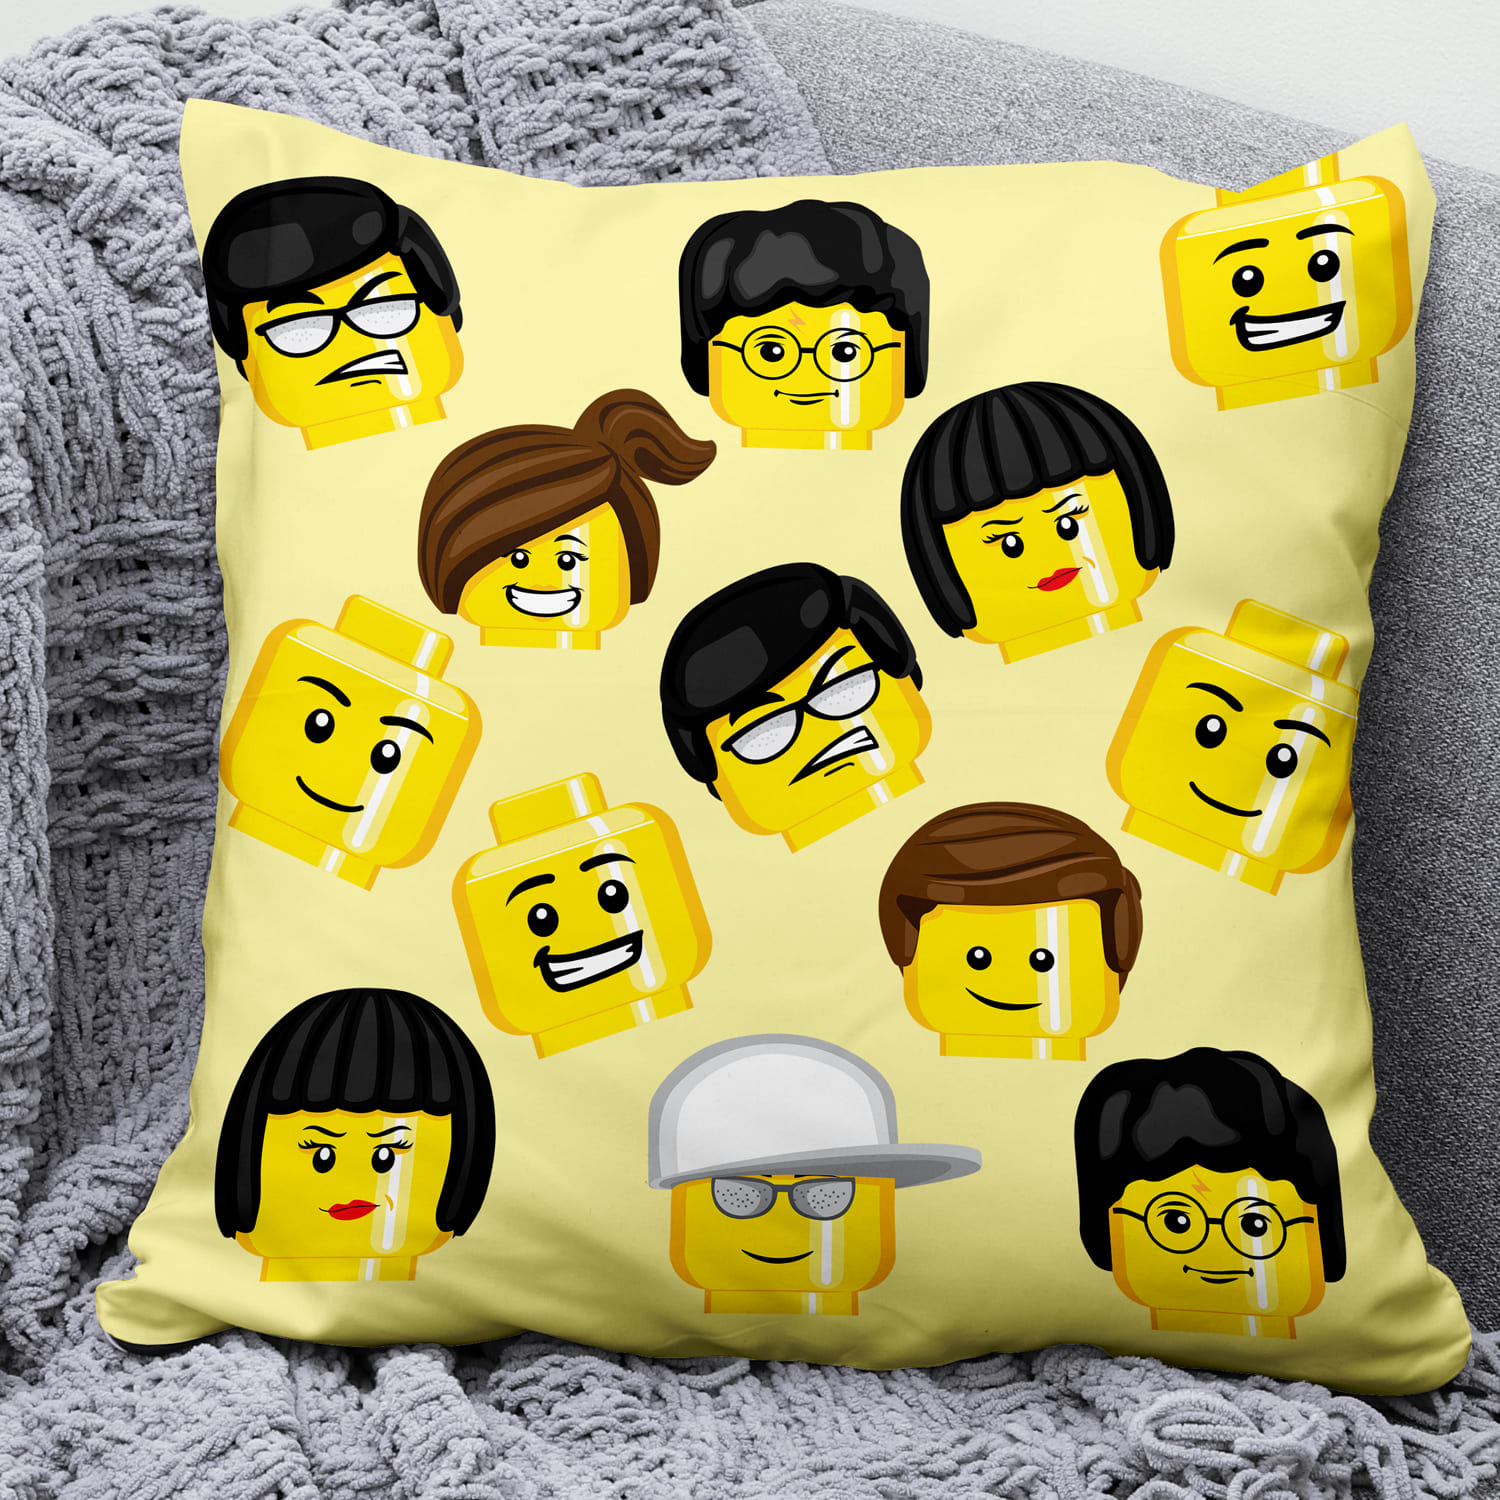 Lego head svg - pillow design.